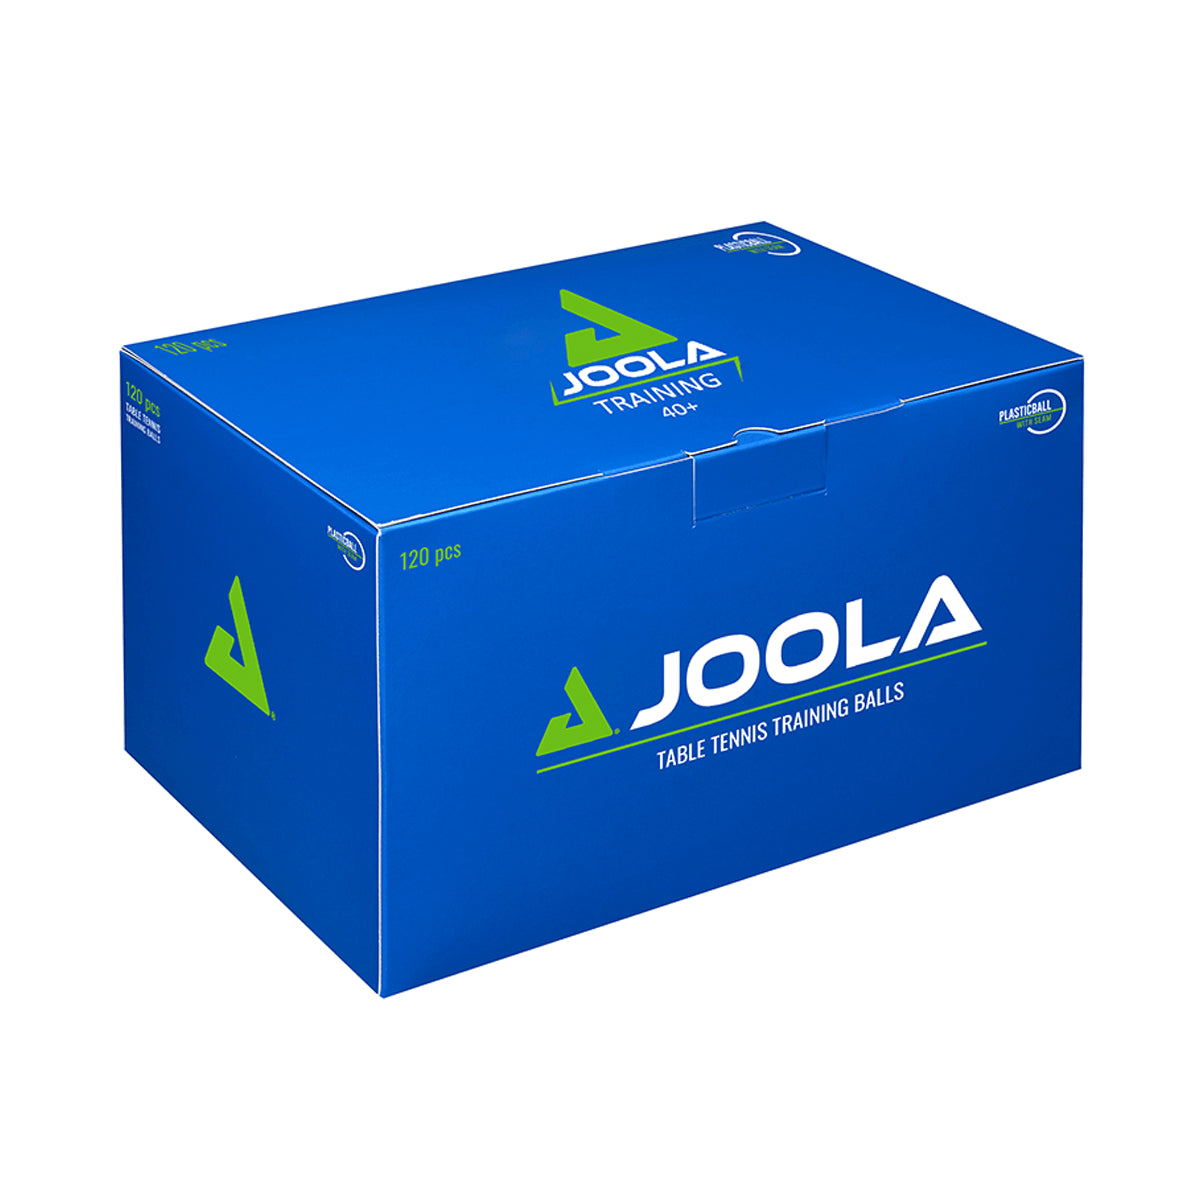 JOOLA ABS Training Table Tennis Balls, 120 Pack